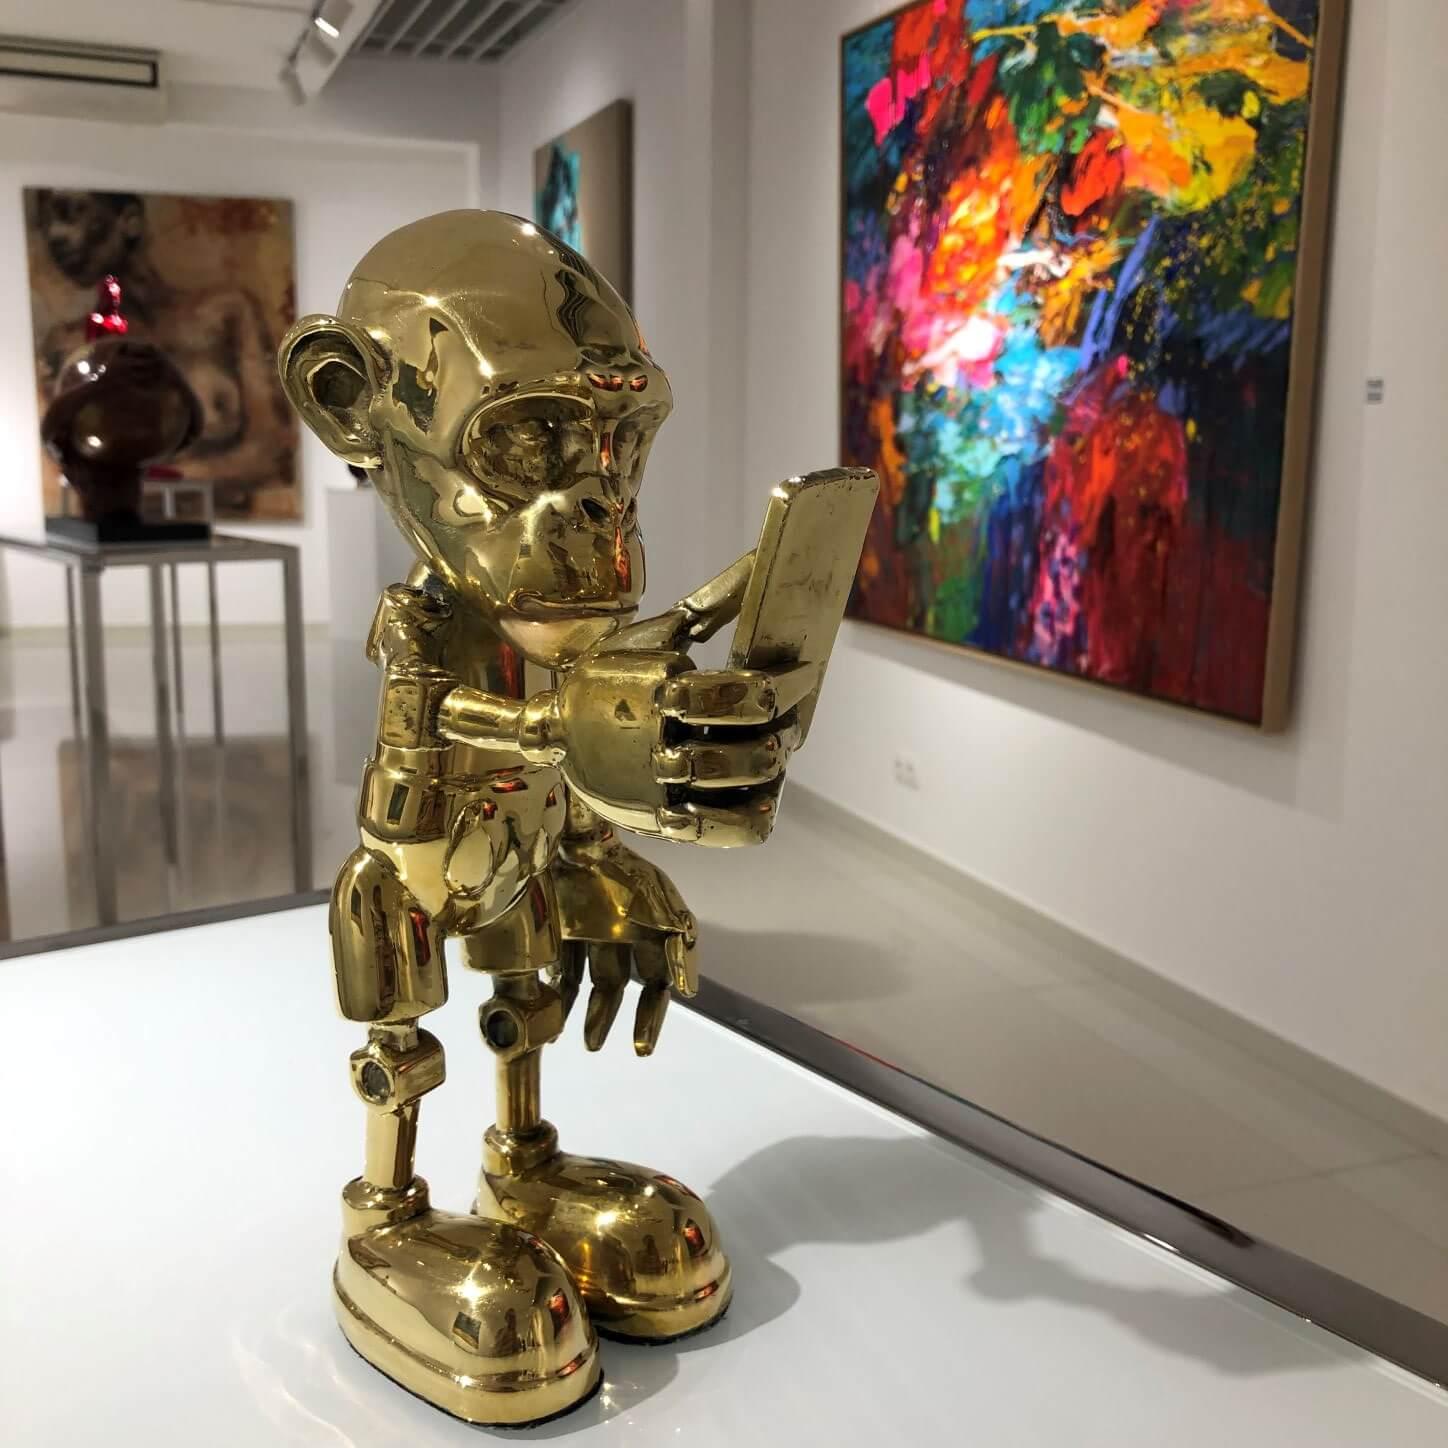 Toy Art Gold is an original work of art by the Brazilian artist Beto Gatti.

Technique: Bronze, Golden patina
Dimensions: 30 x 18 x 16 cm 
Edition: 3/15
